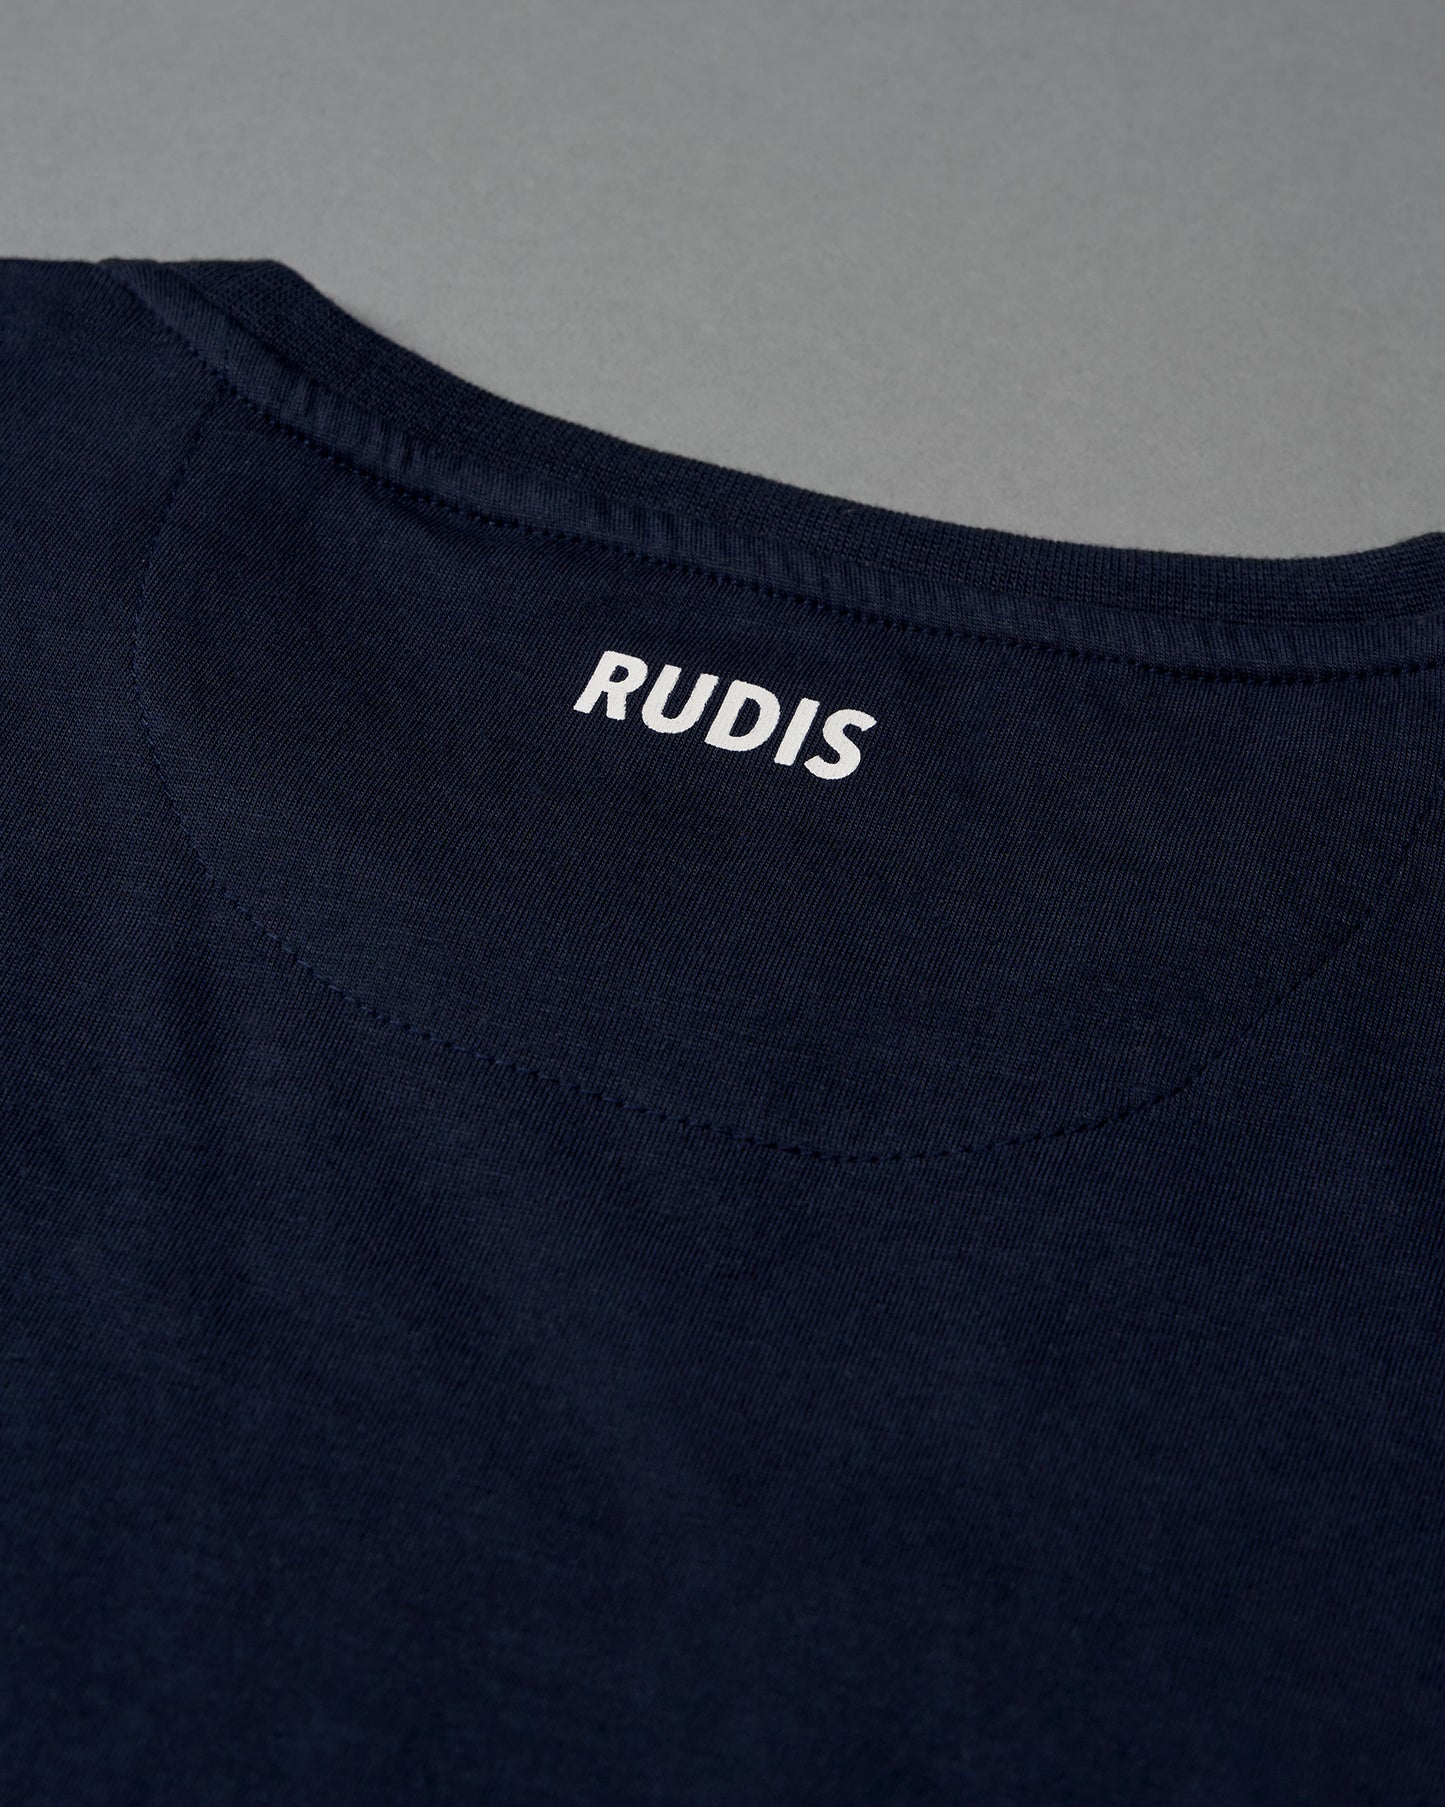 RUDIS The Dream Youth T-Shirt